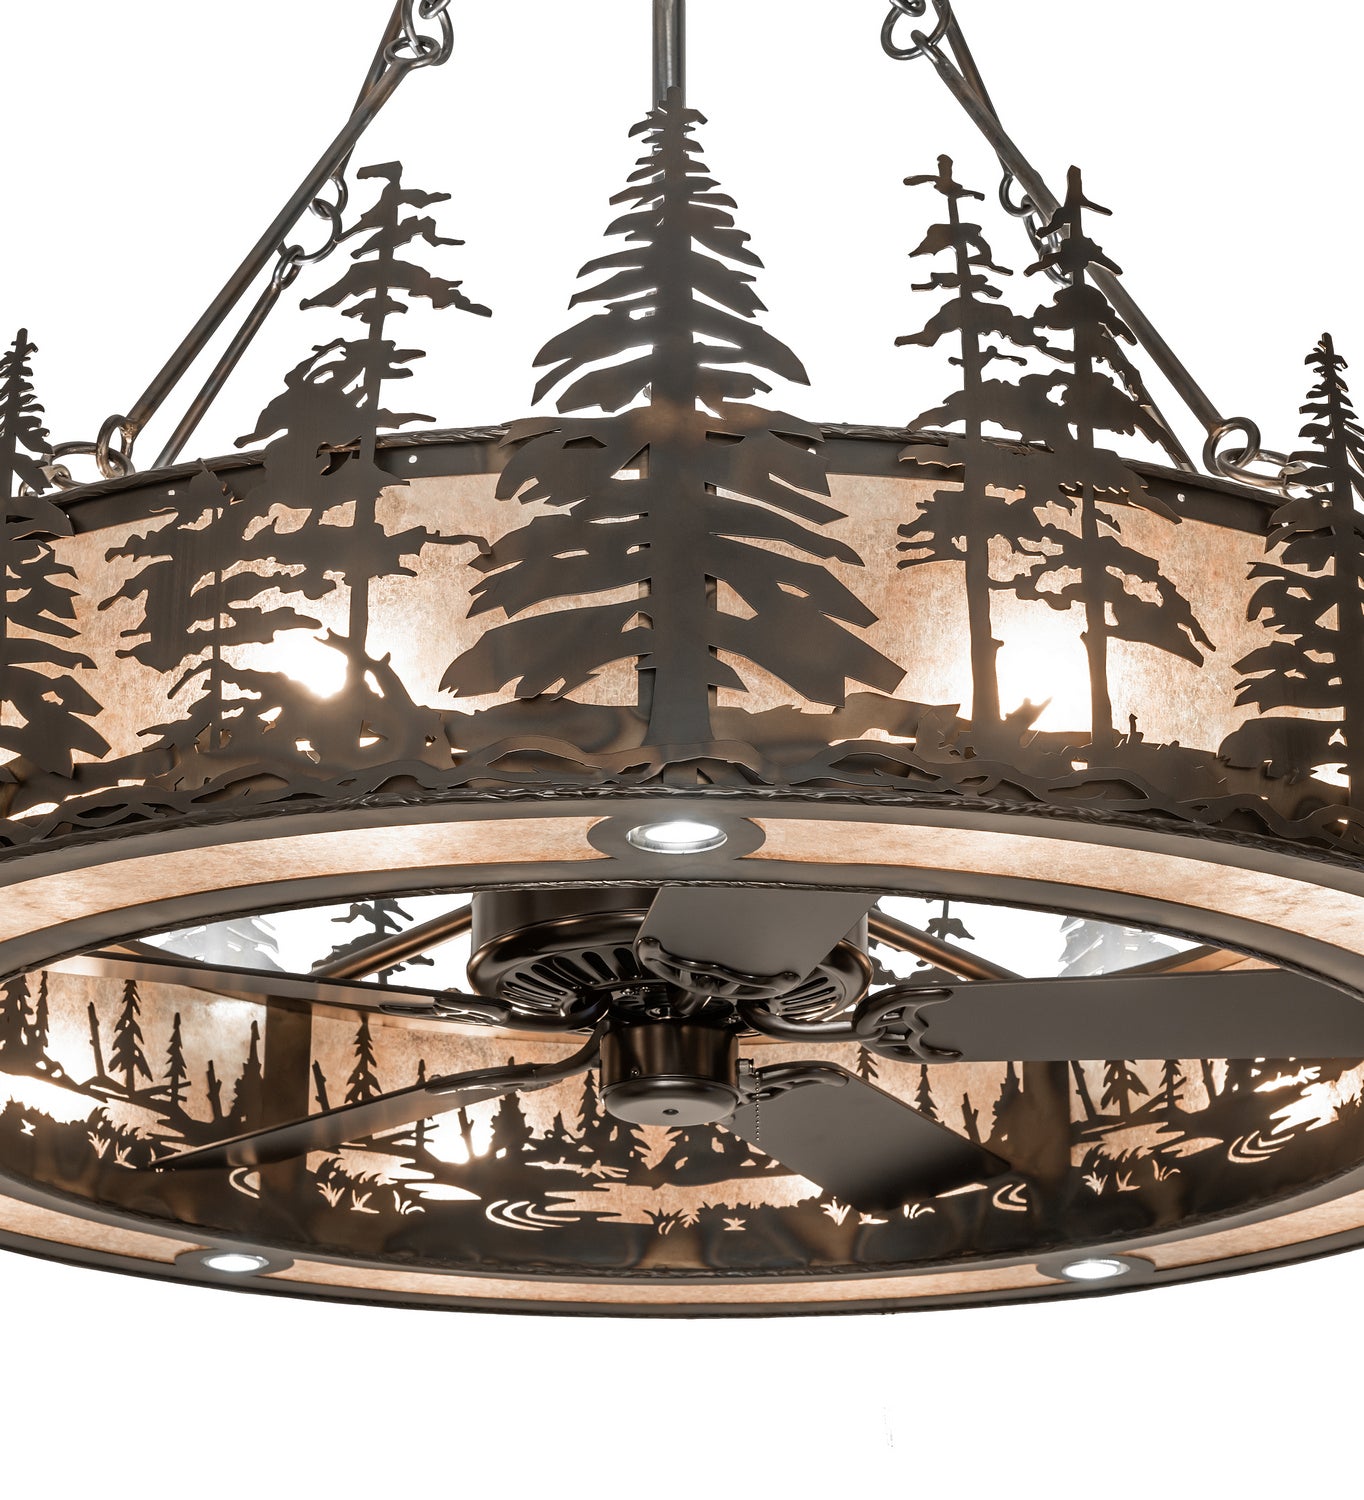 Meyda Tiffany Tall Pines 246789 Ceiling Fan - Antique Copper, Burnished